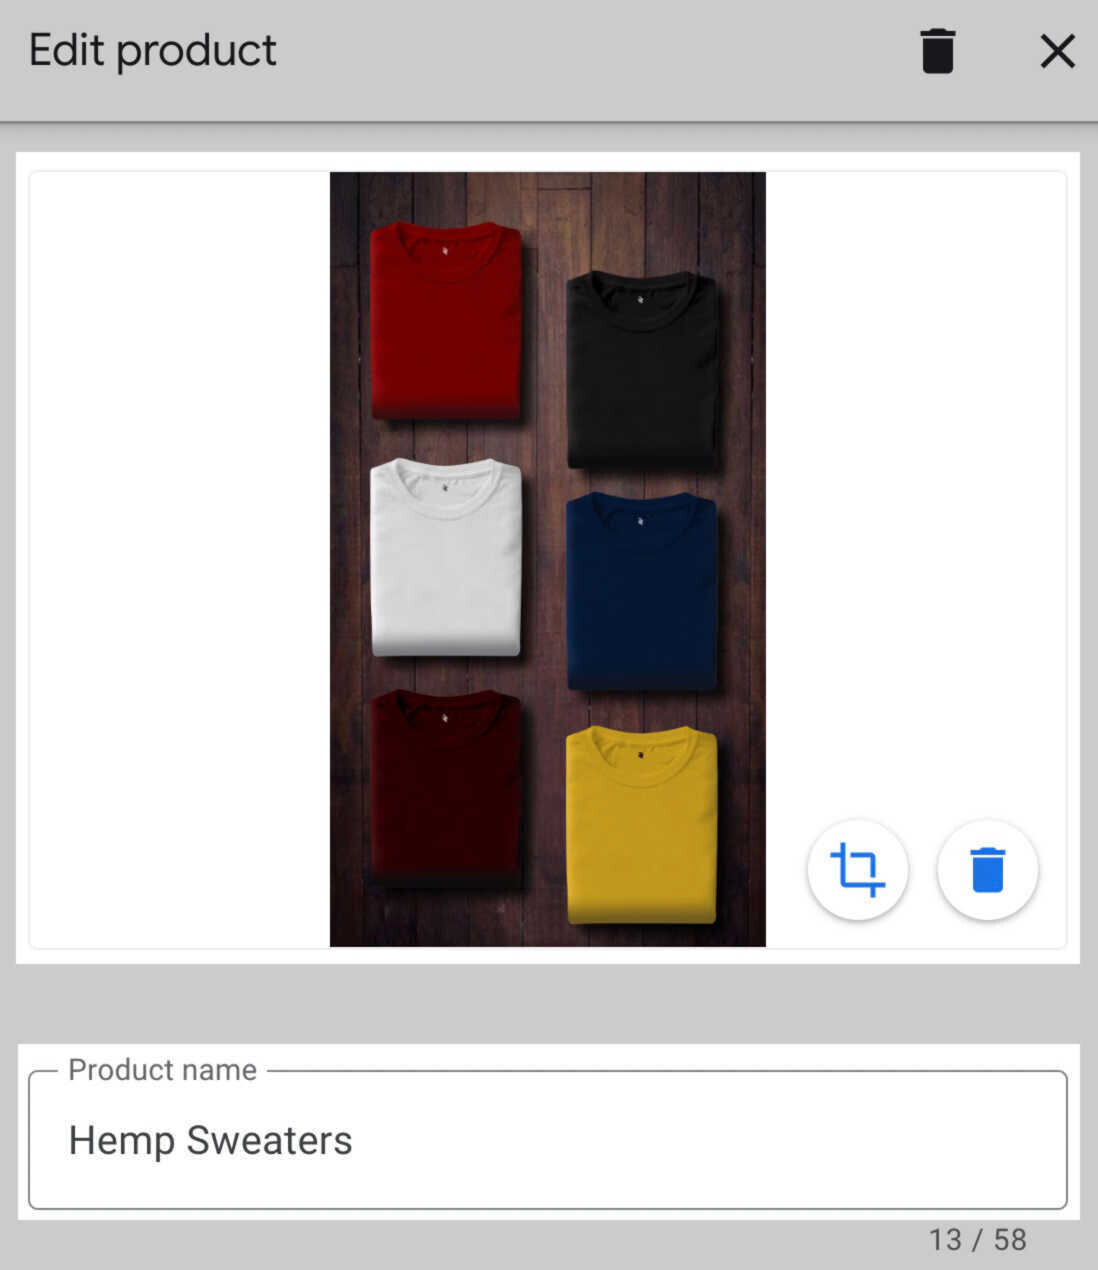 Hemp sweaters